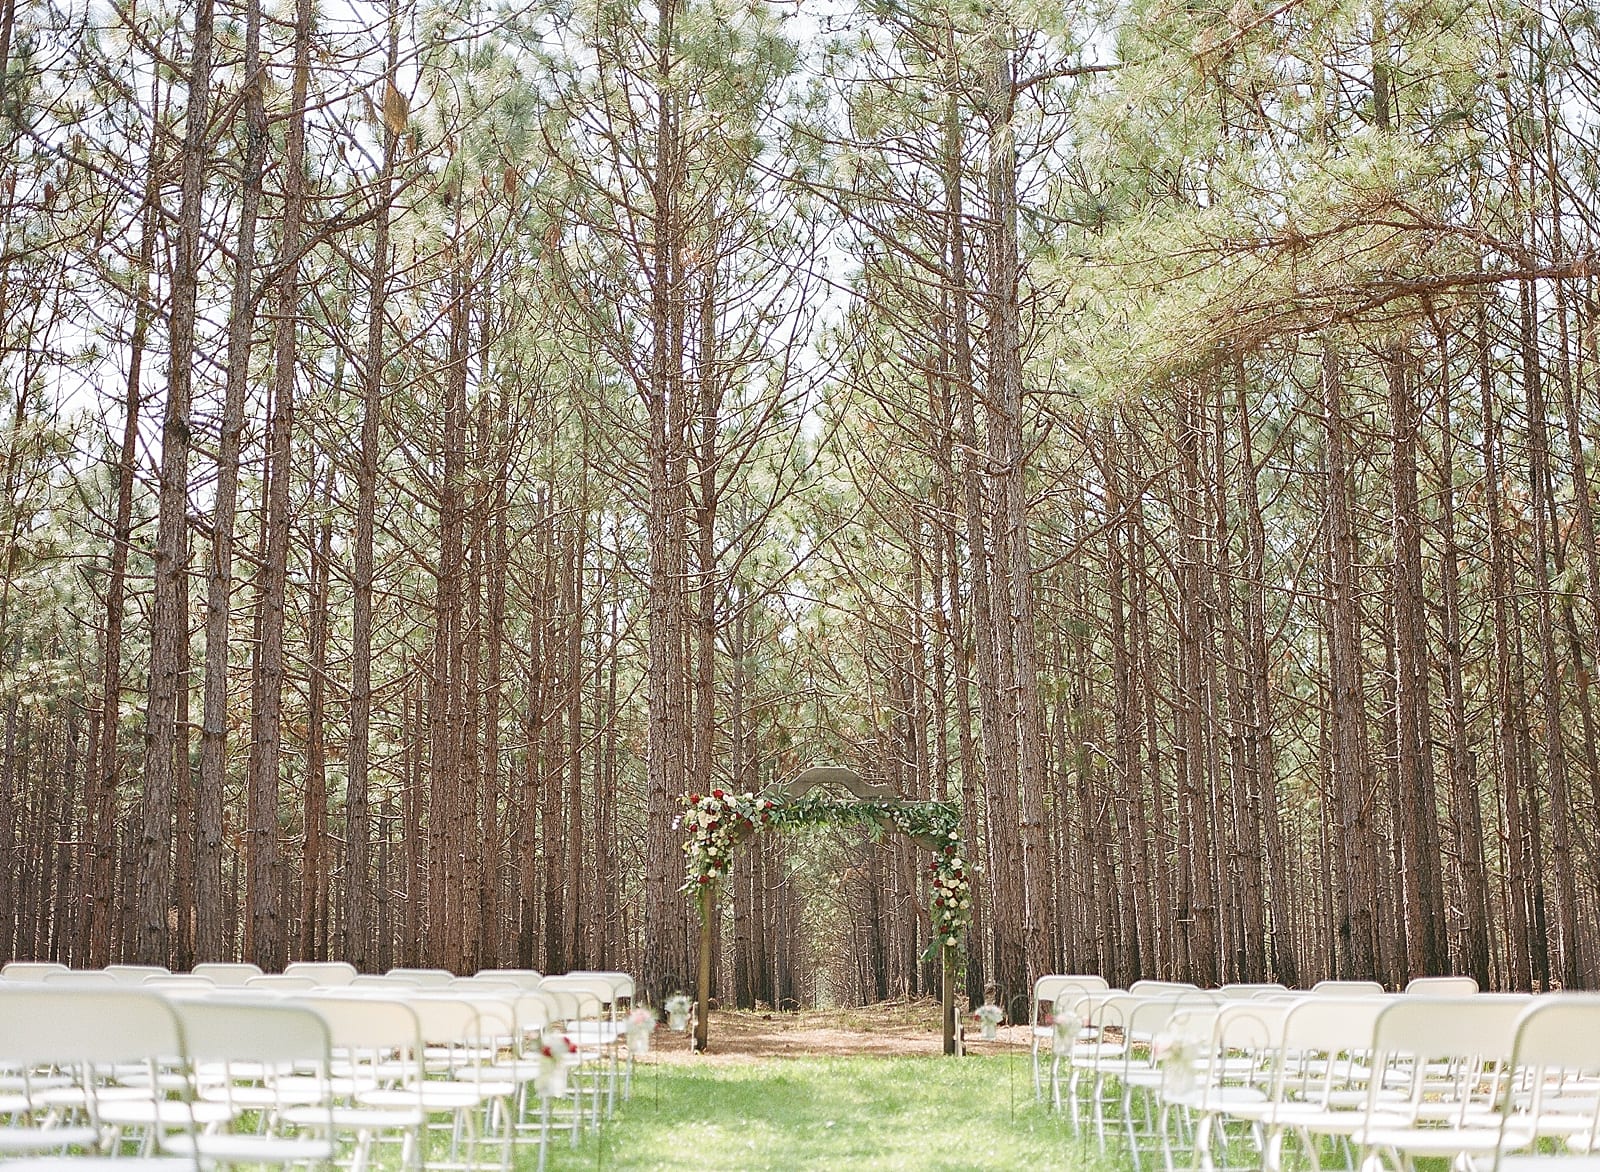 Savannah GA Wedding Photographer Ceremony Site in Pine Trees Photo